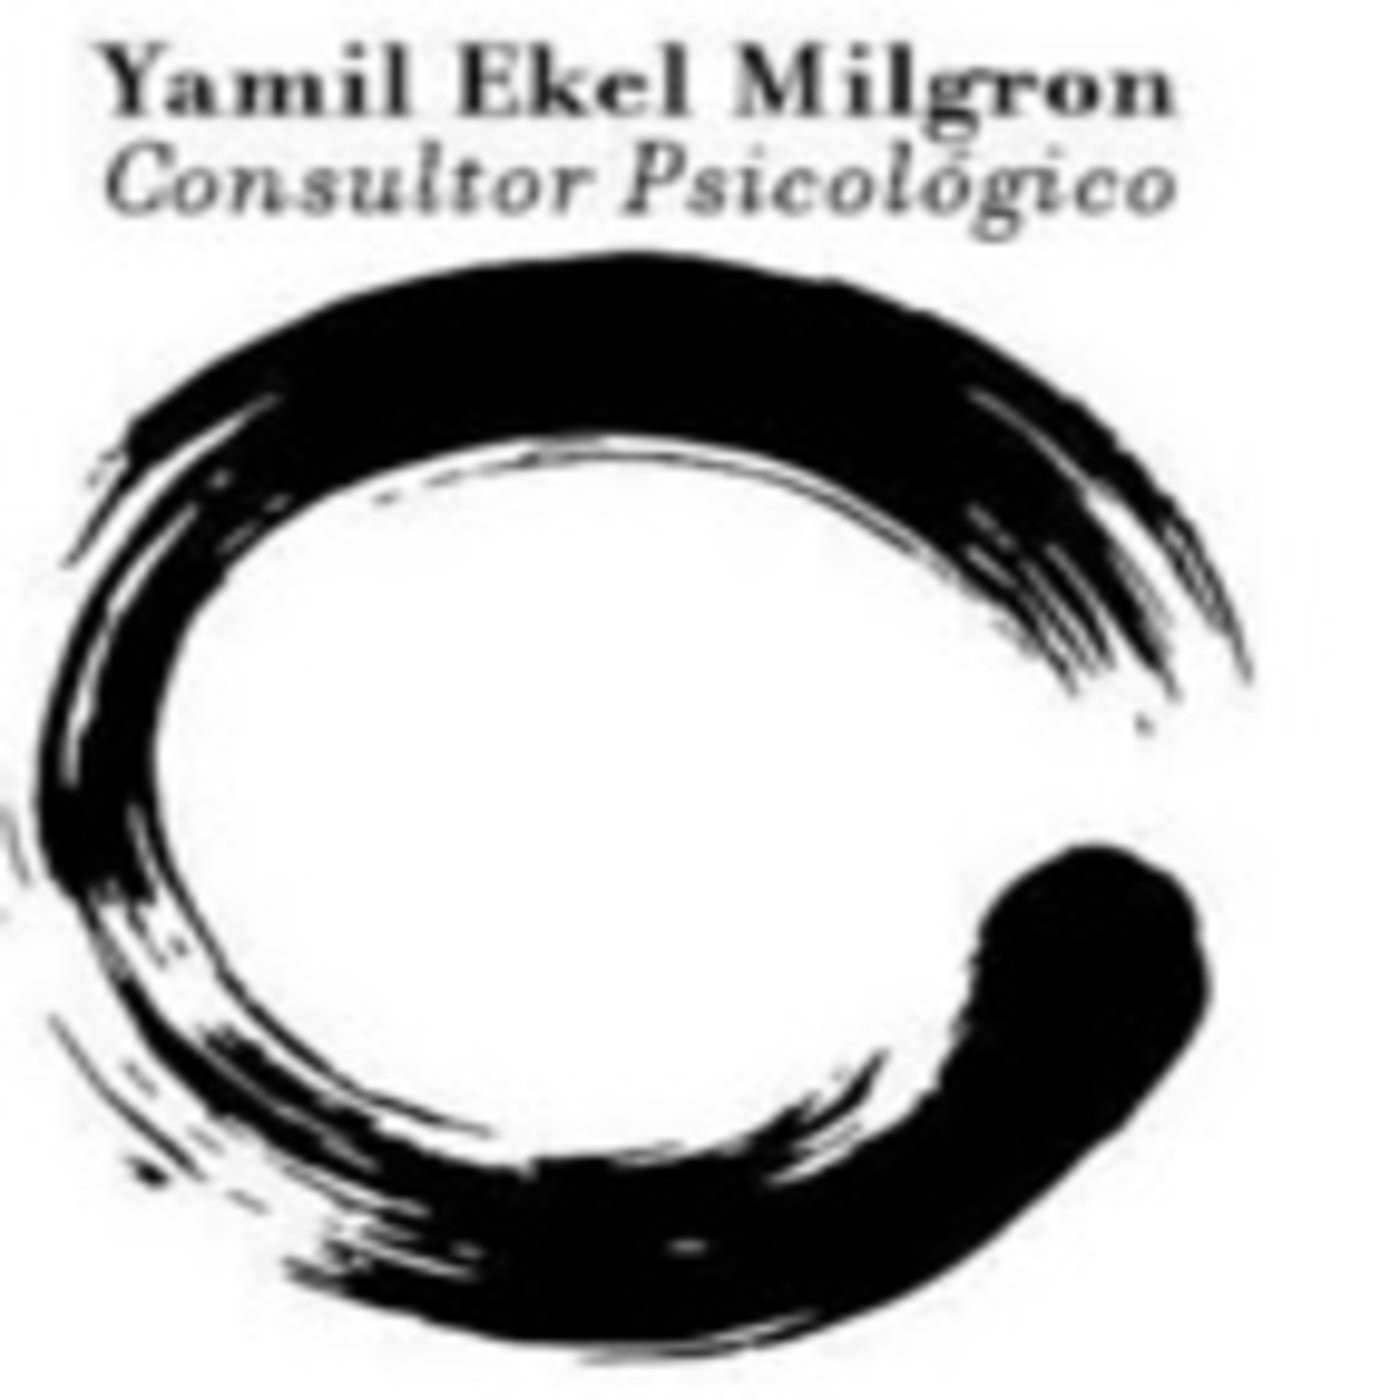 Podcast de Yamil Ekel Milgron - Consultor